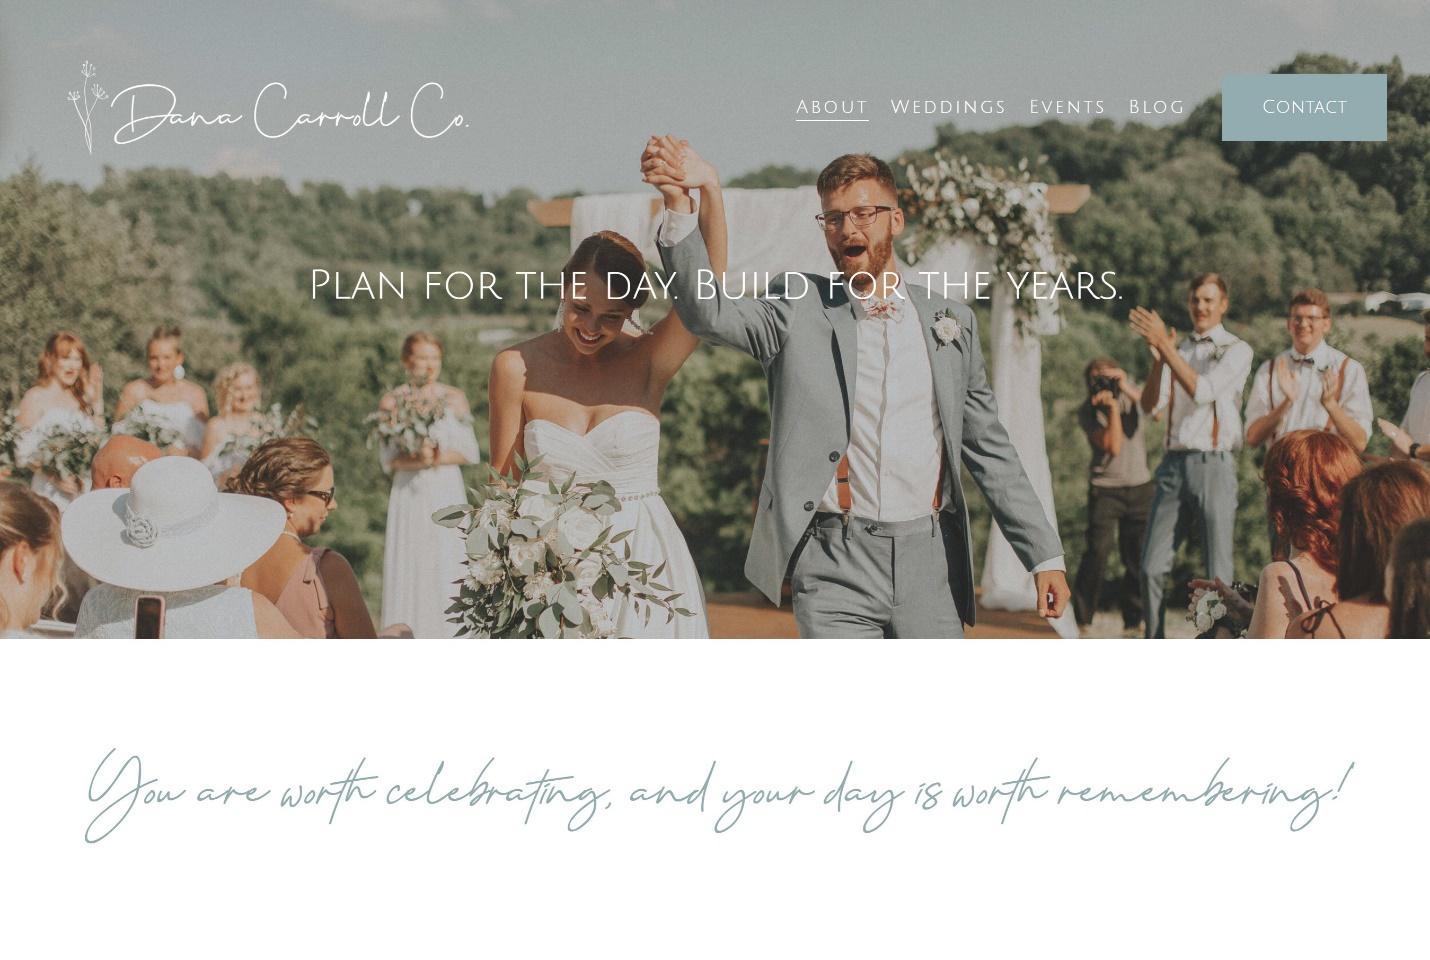 Dana Carroll Co. wedding planner page À propos.